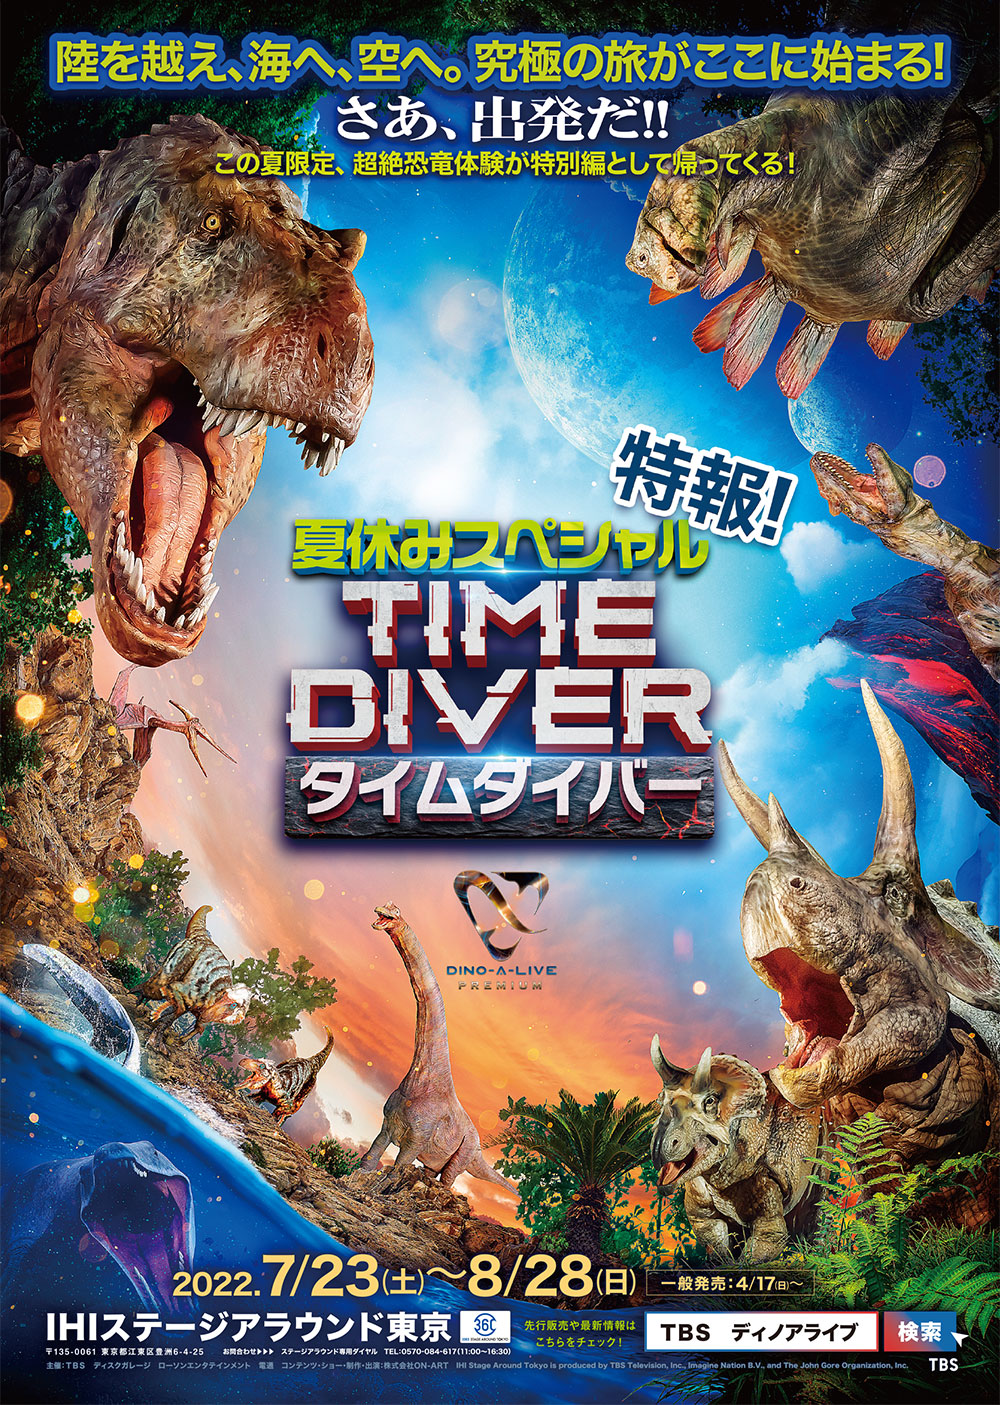 IHI Stage Around Tokyo现举行暑假版「Dino Alive Premium Time Diver」。 网上图片